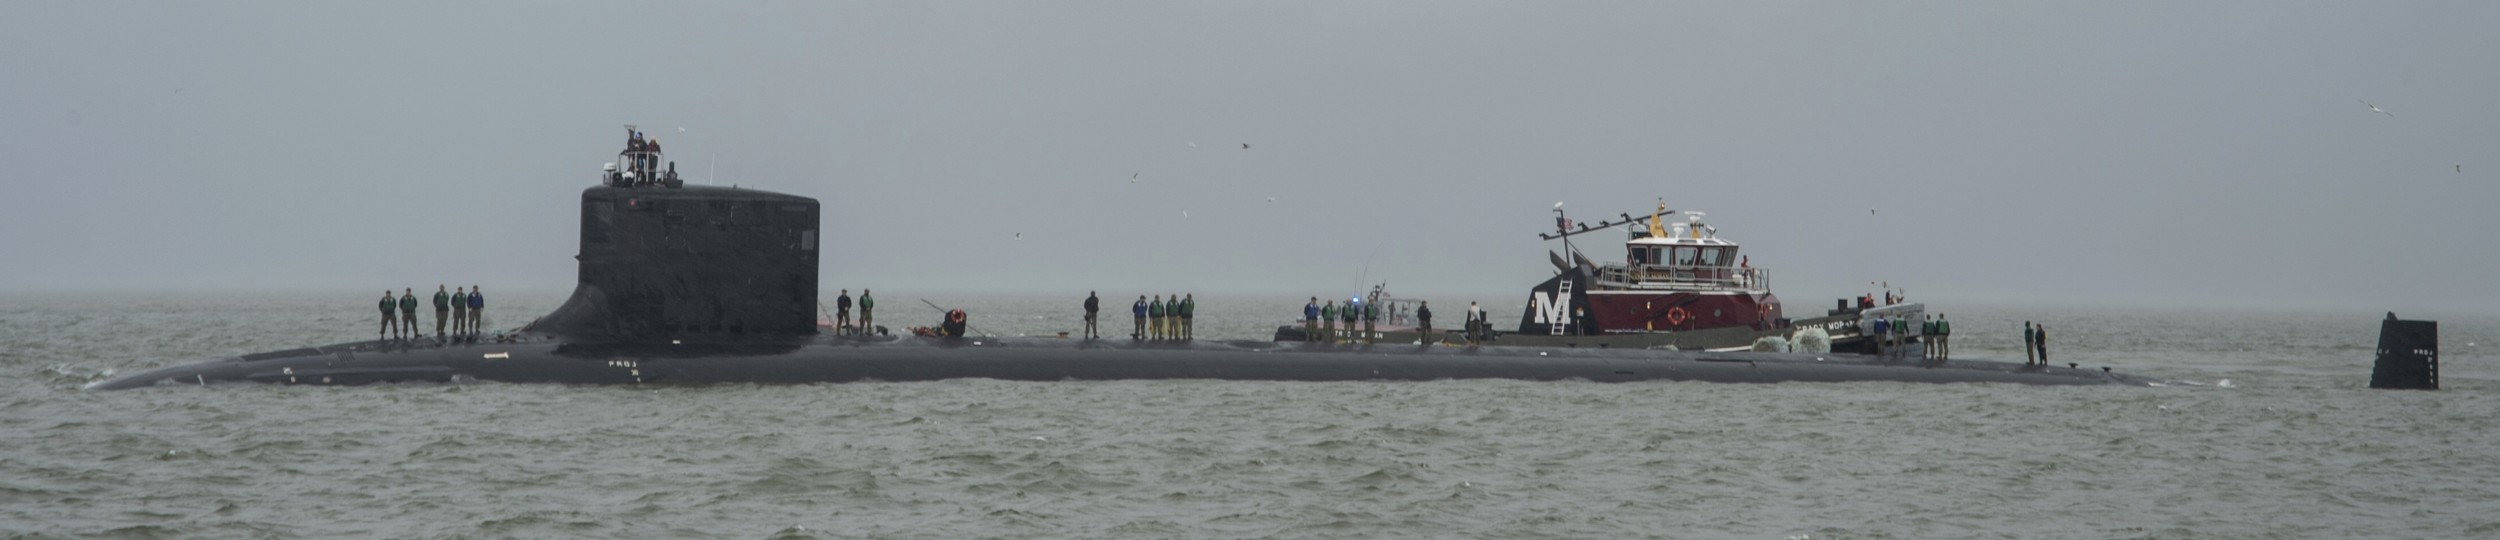 ssn-787 uss washington virginia class attack submarine us navy 41